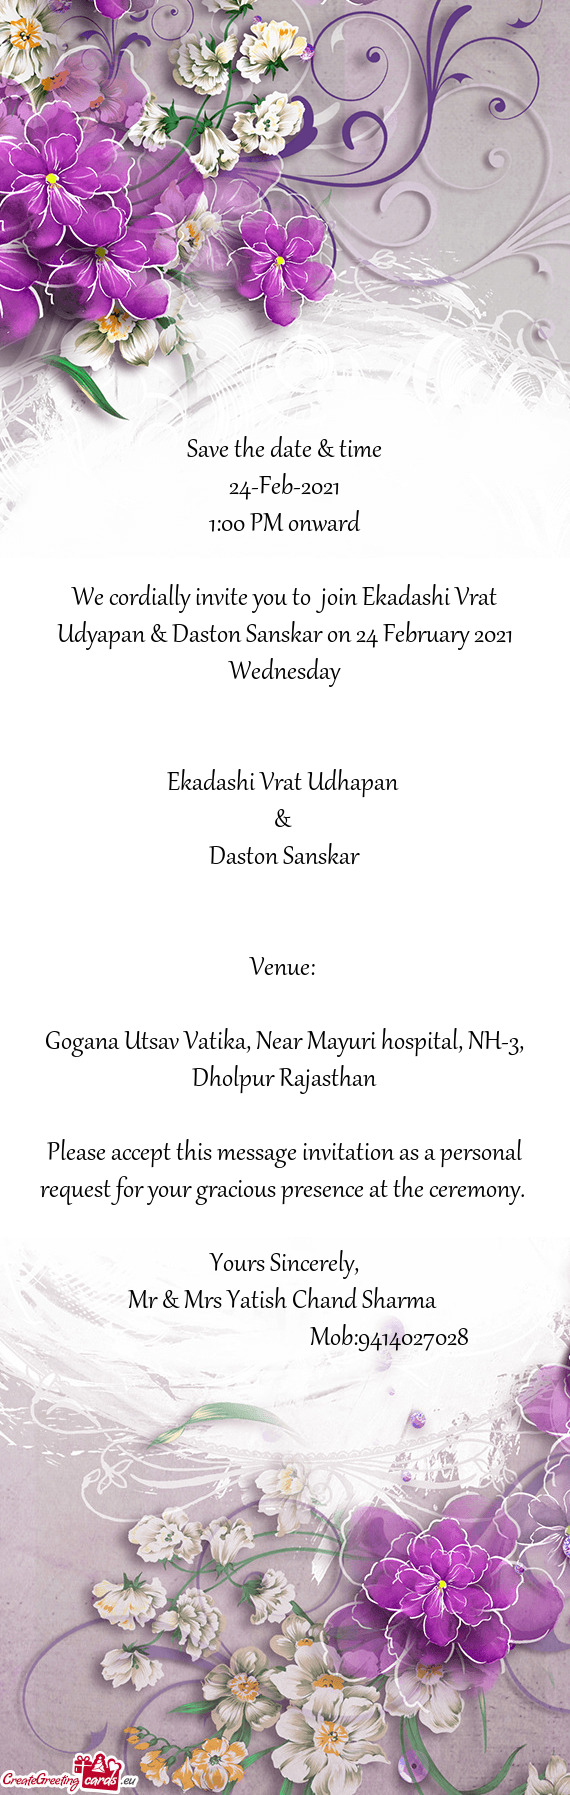 We cordially invite you to join Ekadashi Vrat Udyapan & Daston Sanskar on 24 February 2021 Wednesda